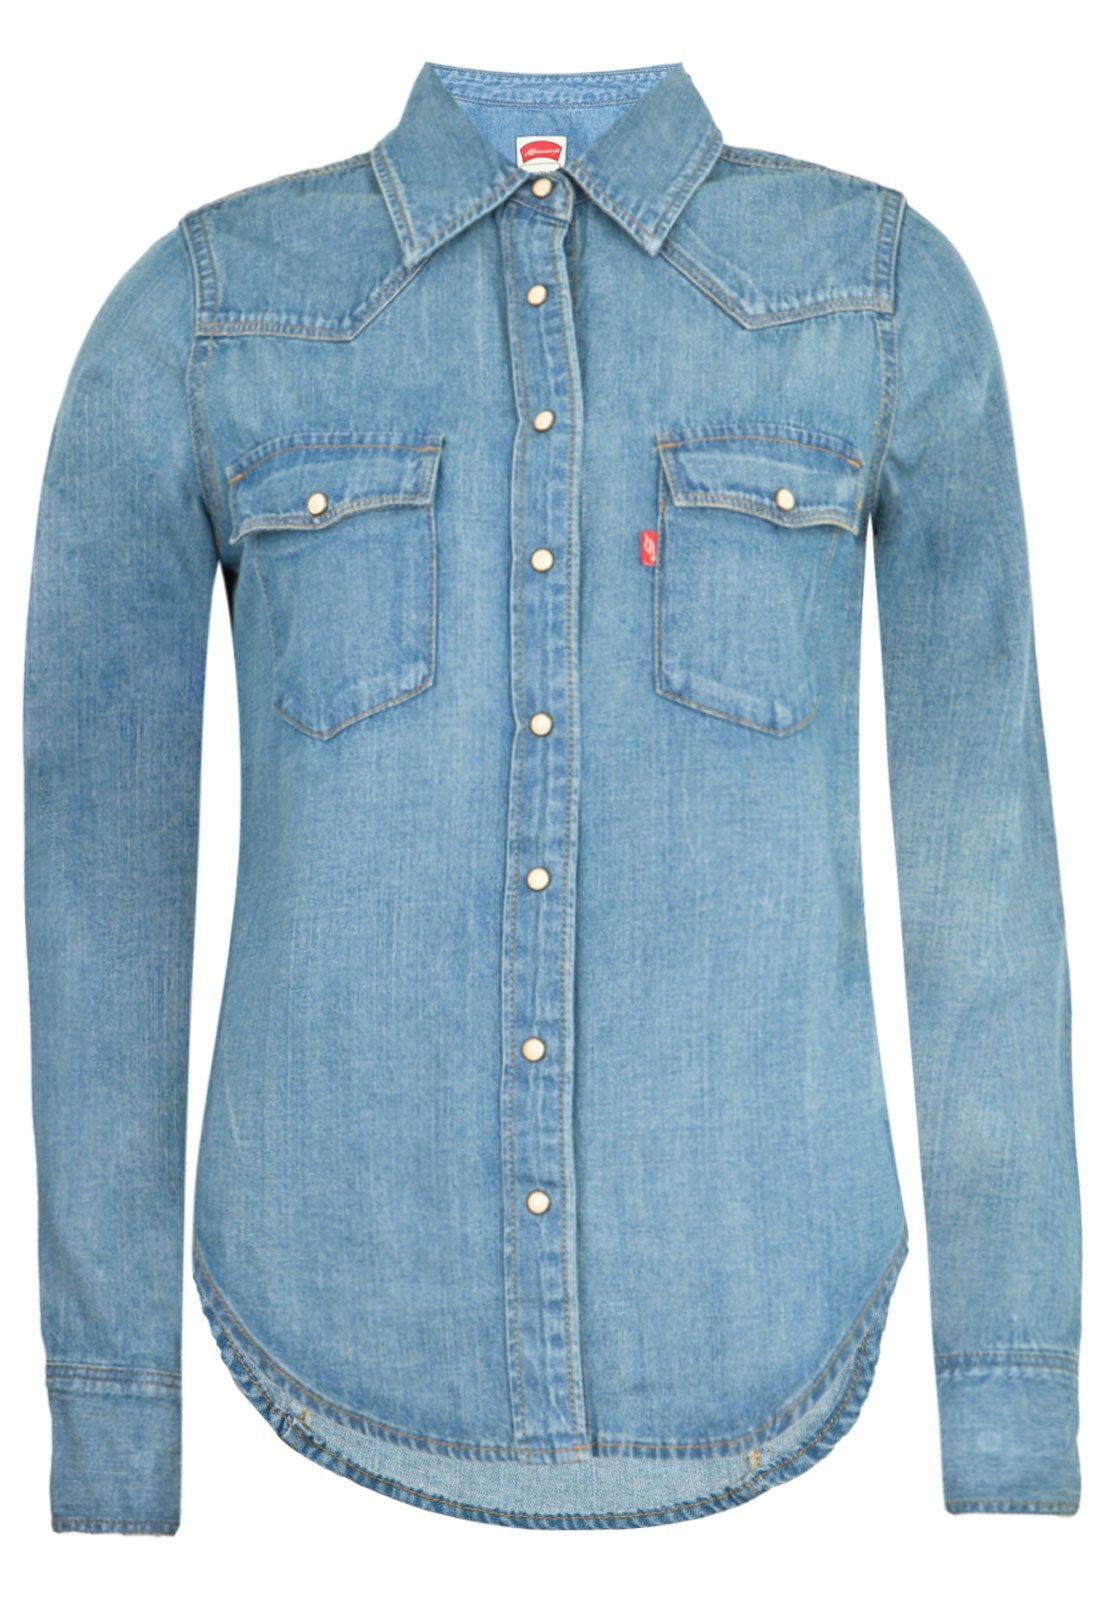 jaqueta jeans sawary masculina